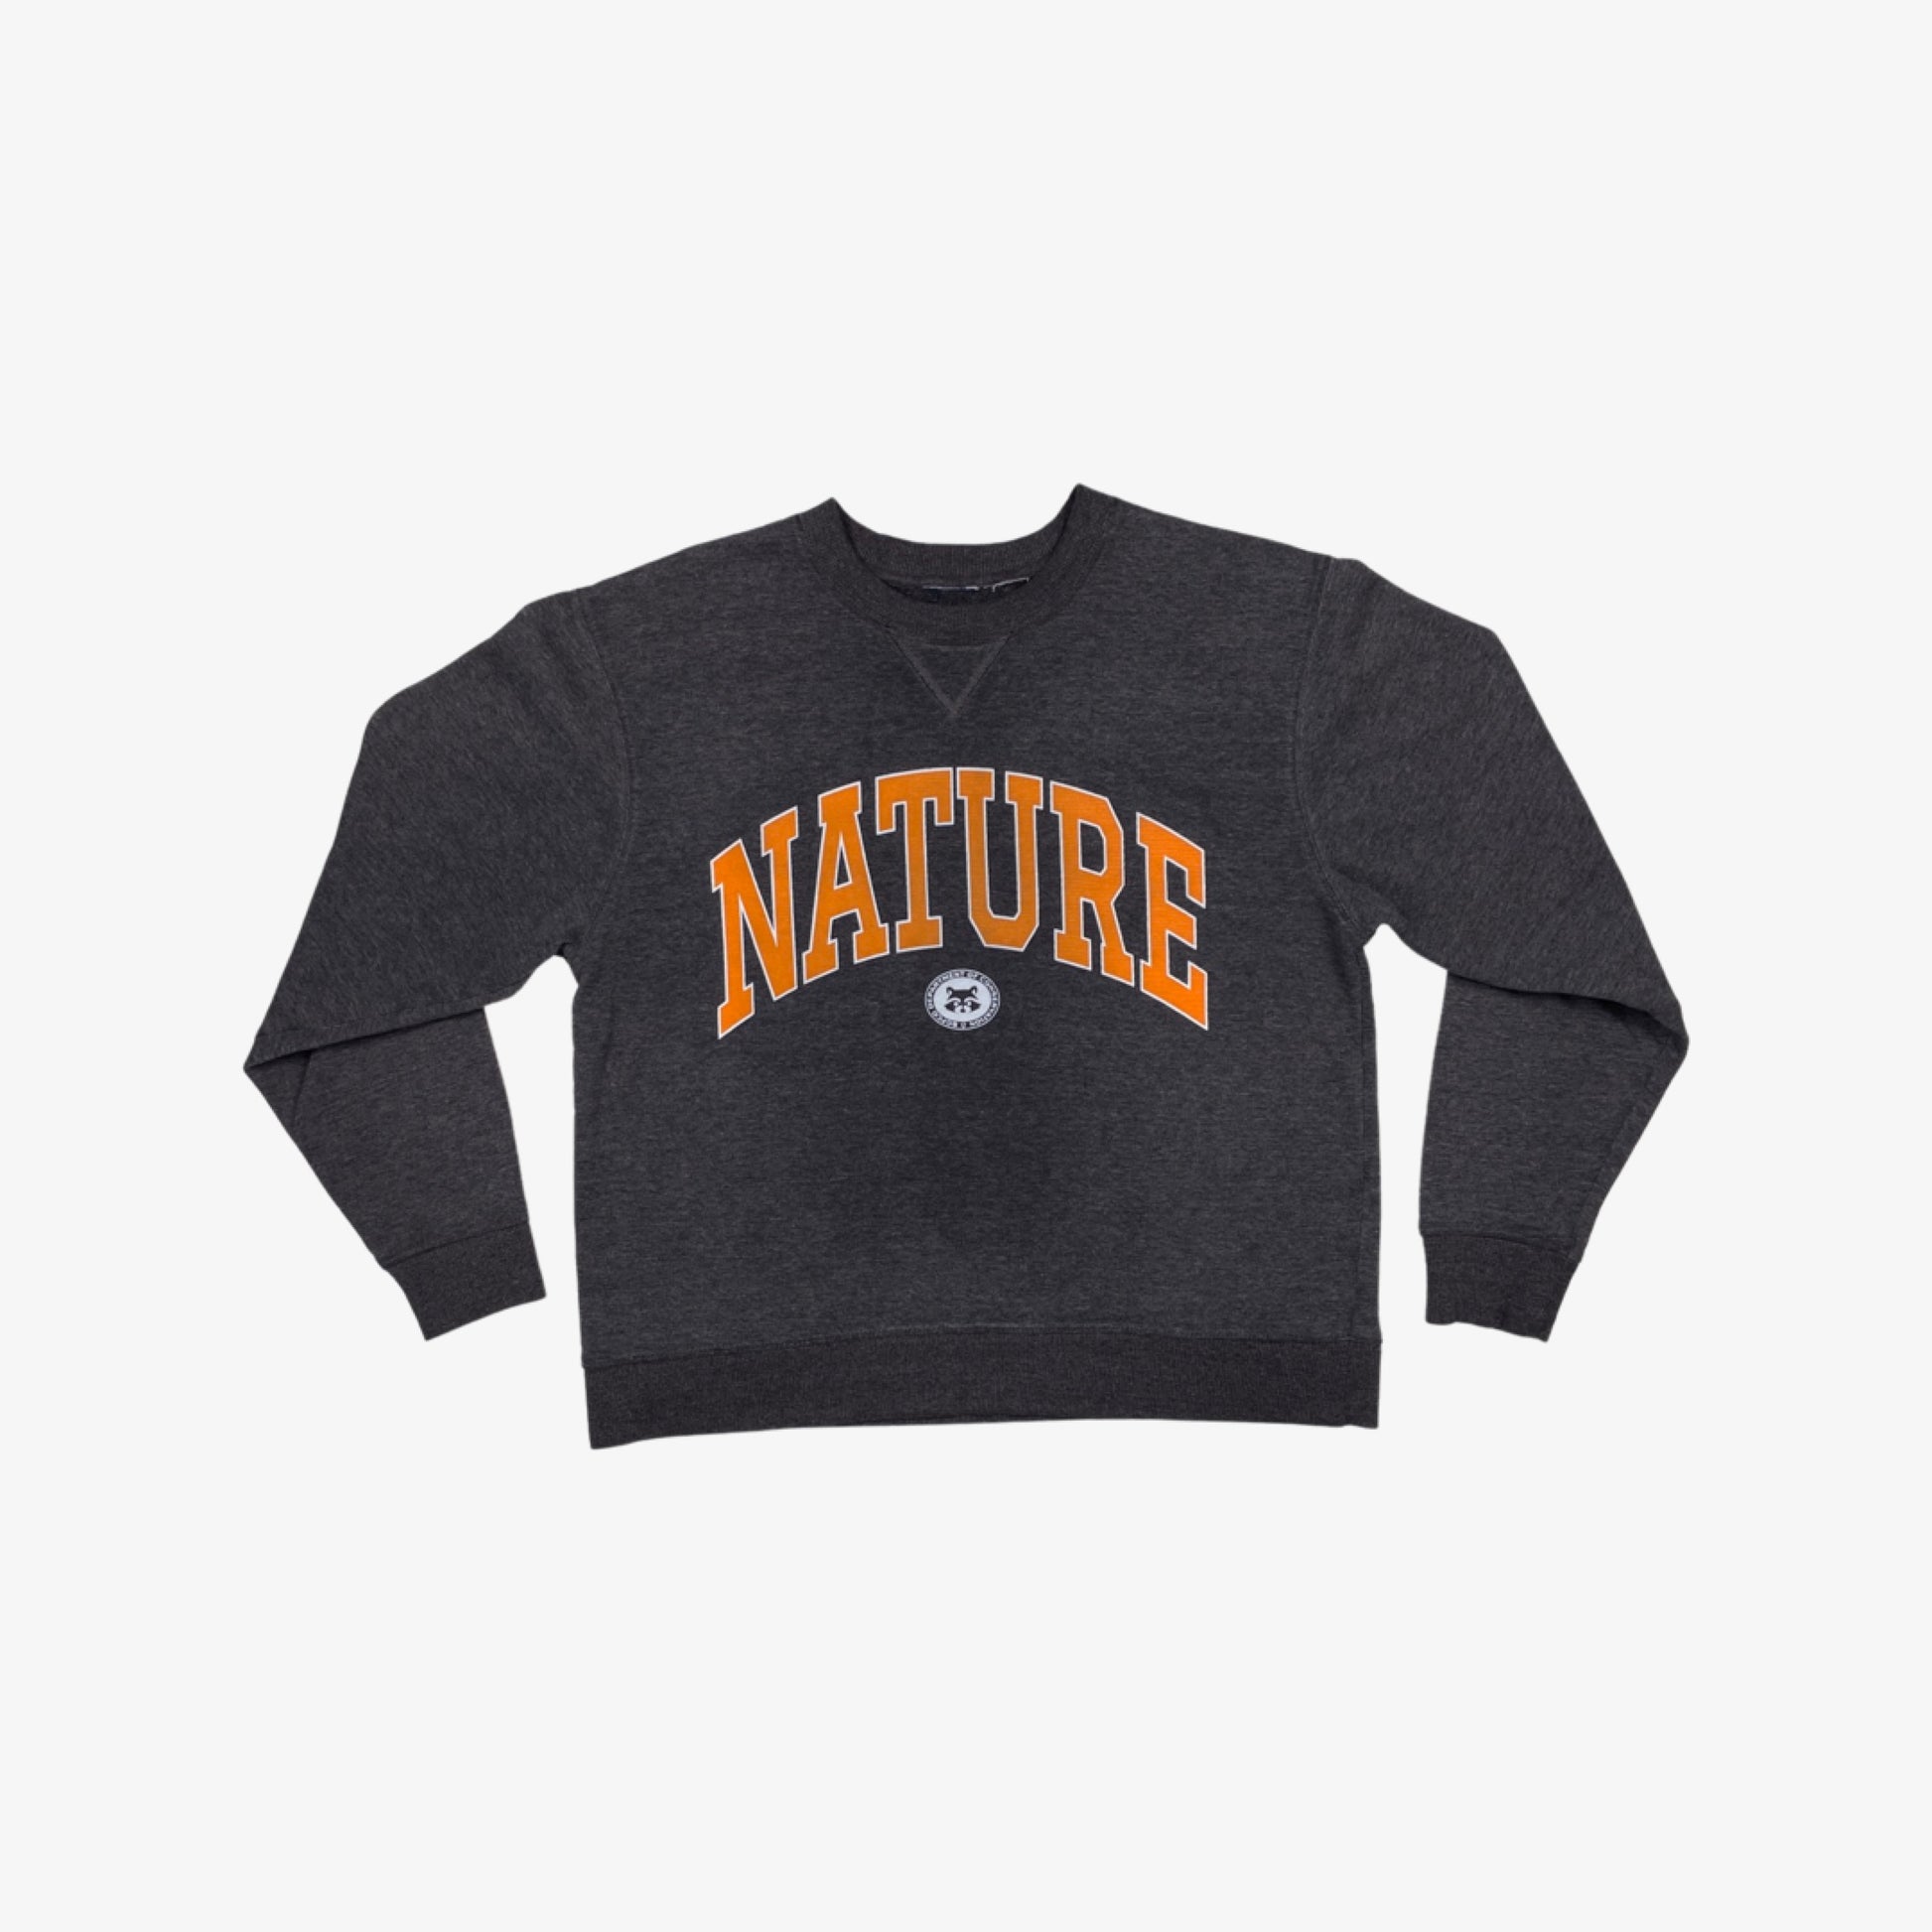 SGFCO Nature Sweatshirt